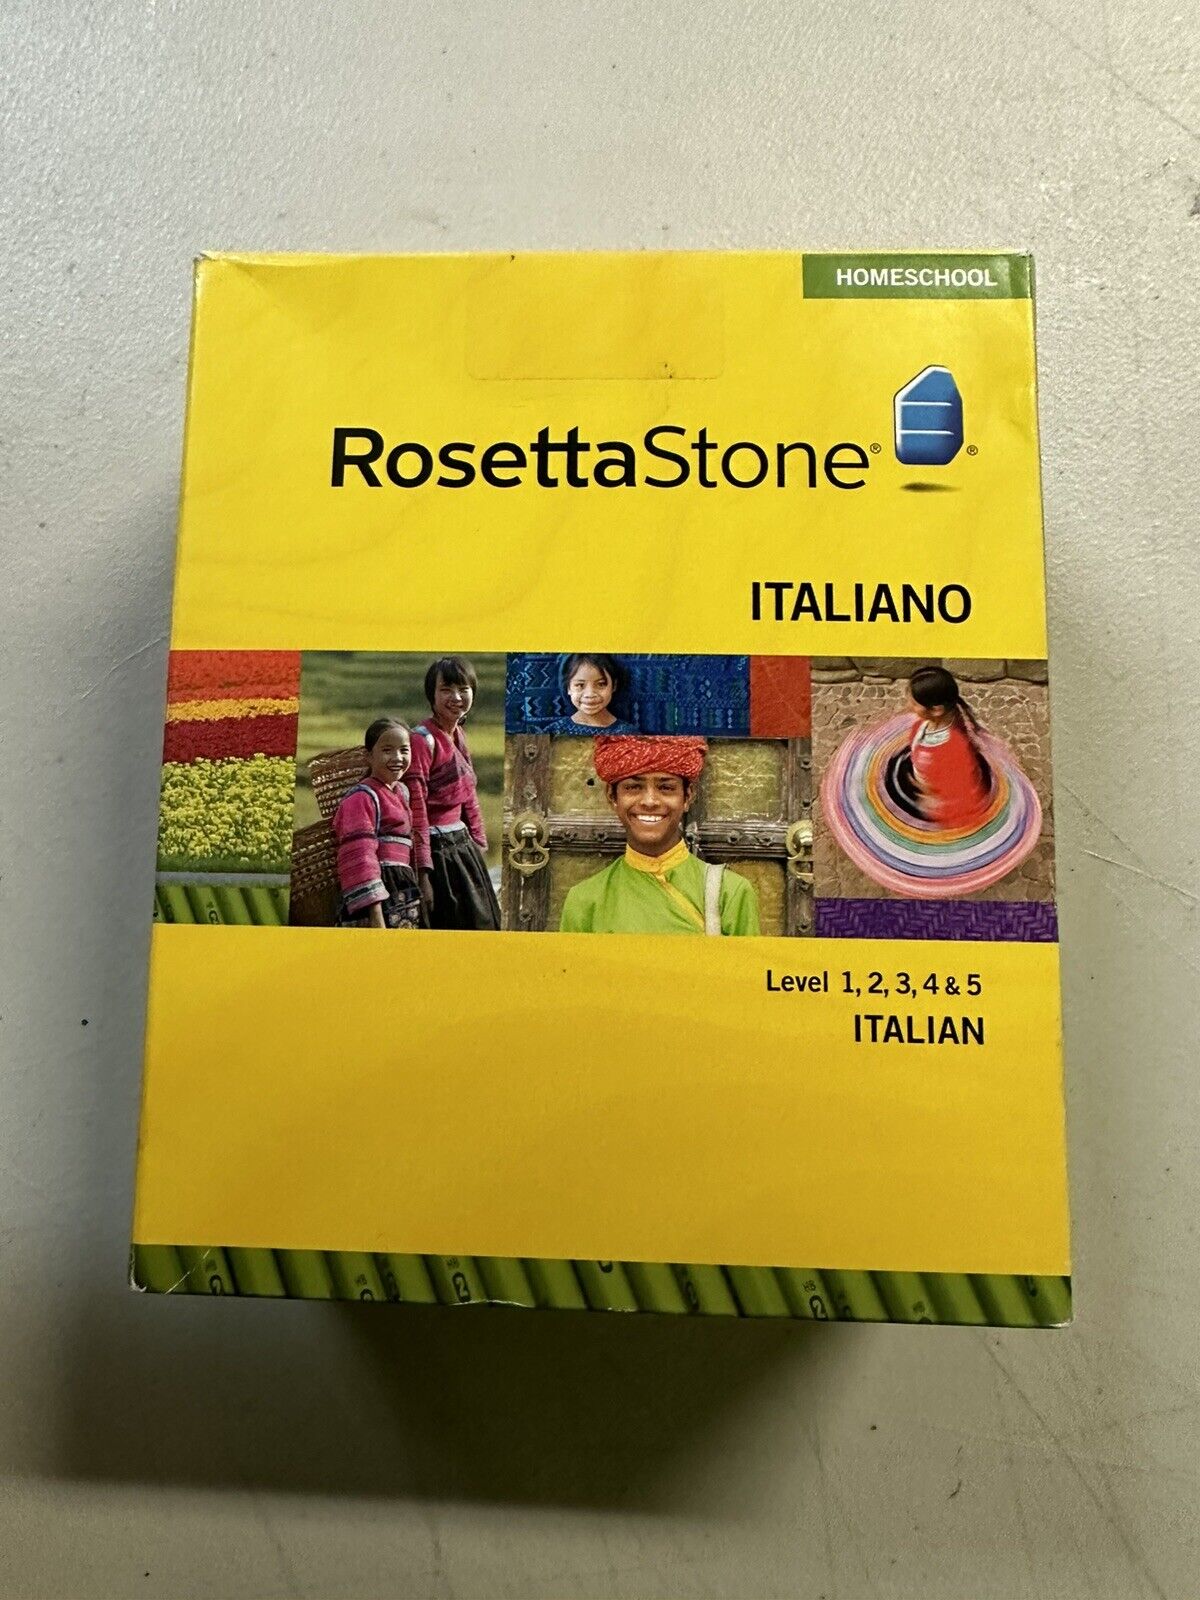 rosetta stone italian Level 1,2,3,4&5 Home School